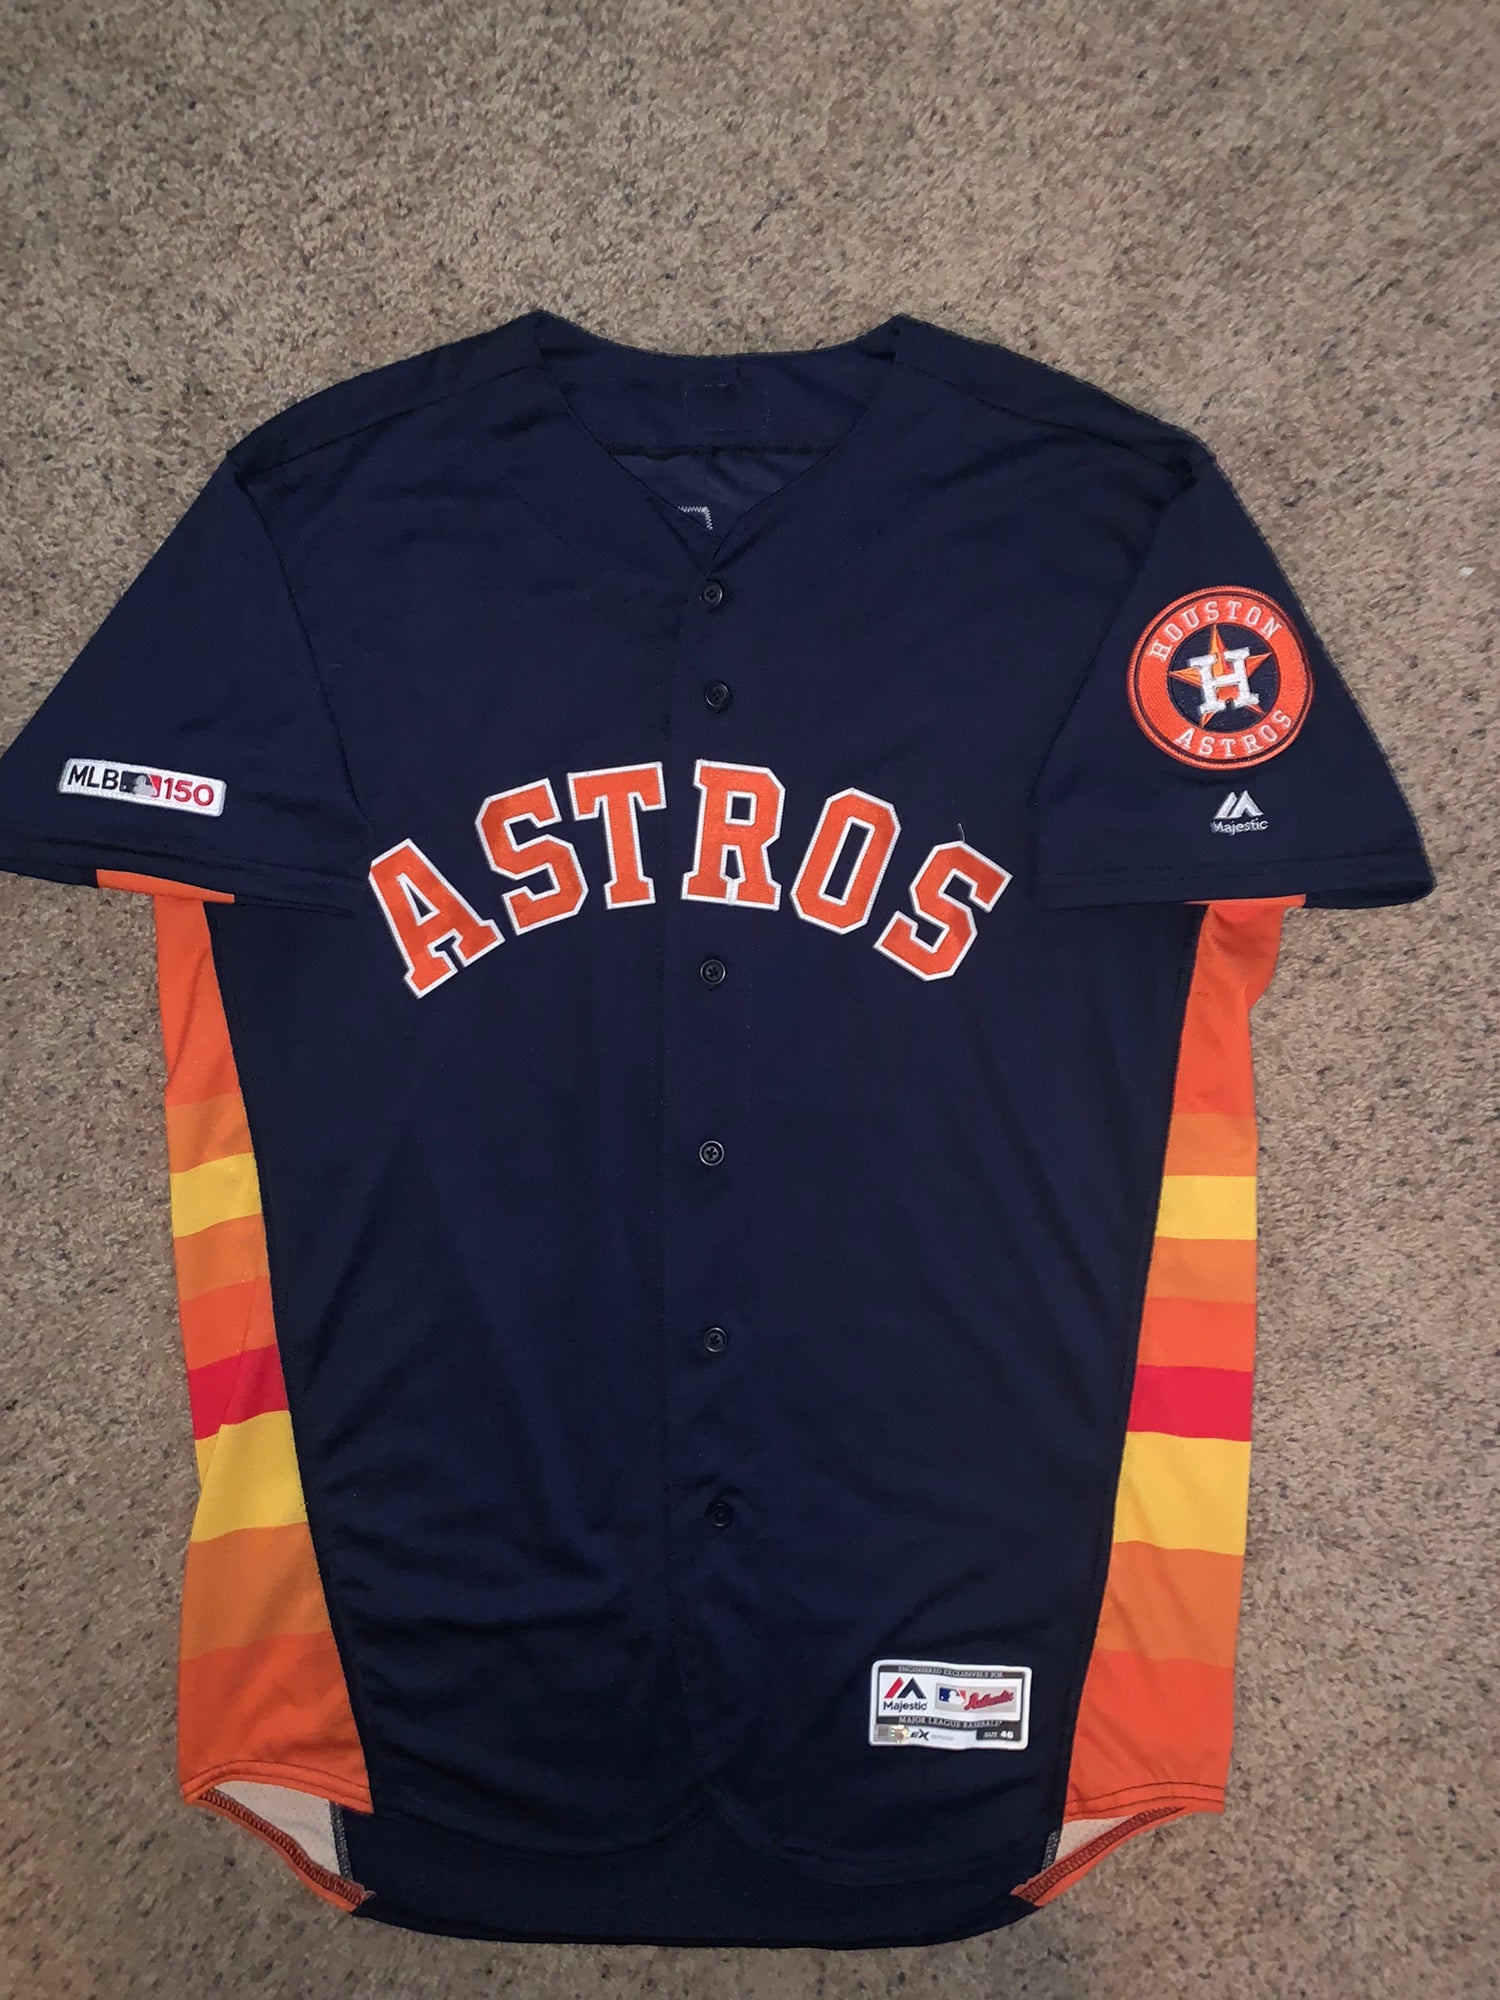 astros original jersey